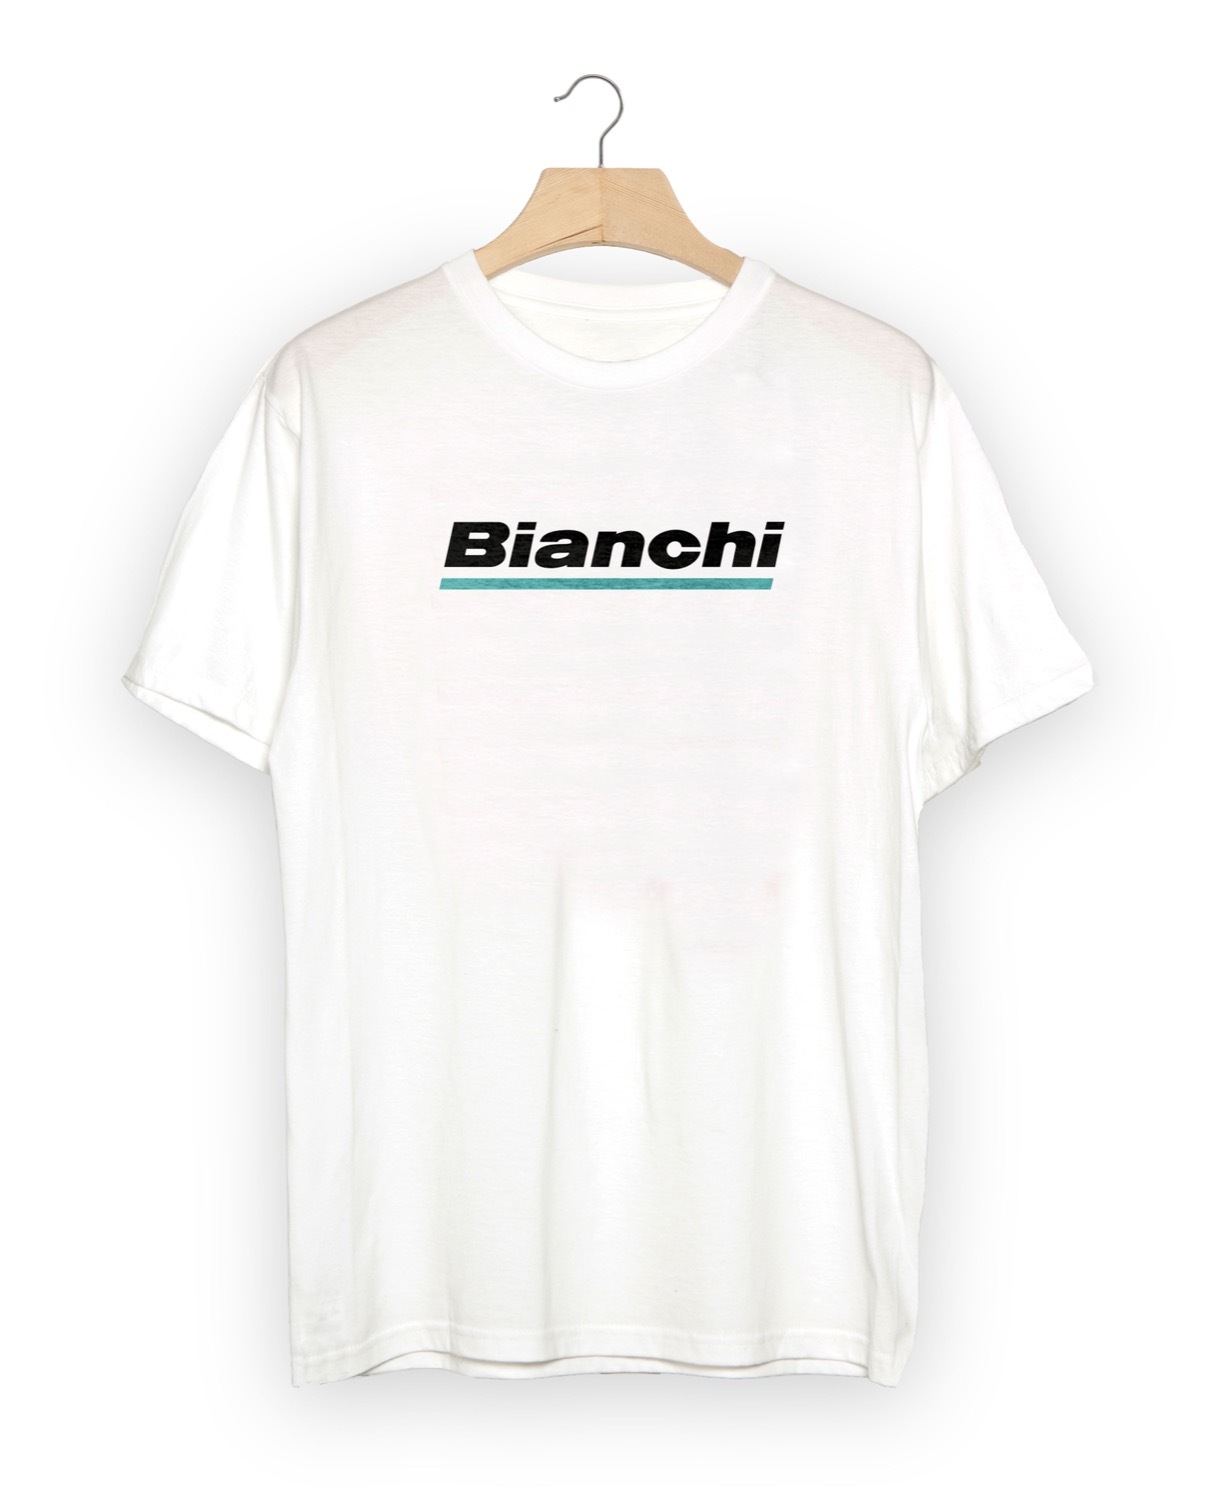 Bianchi Freetime Logo T-Shirt - White